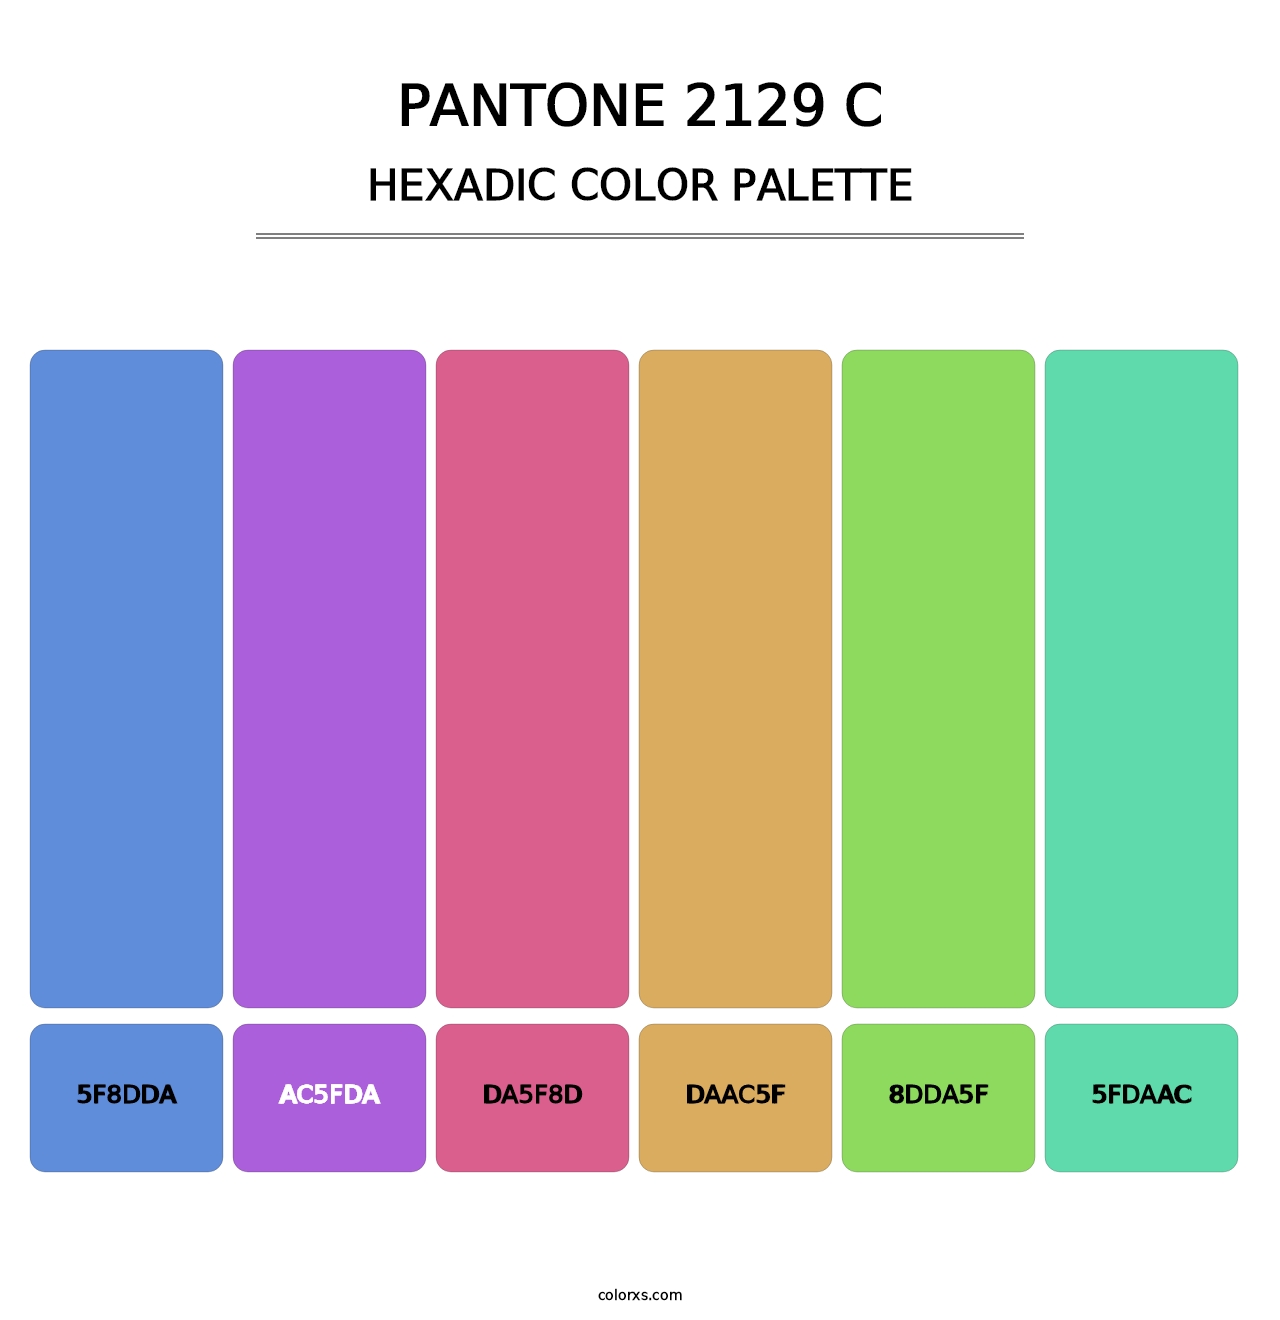 PANTONE 2129 C - Hexadic Color Palette